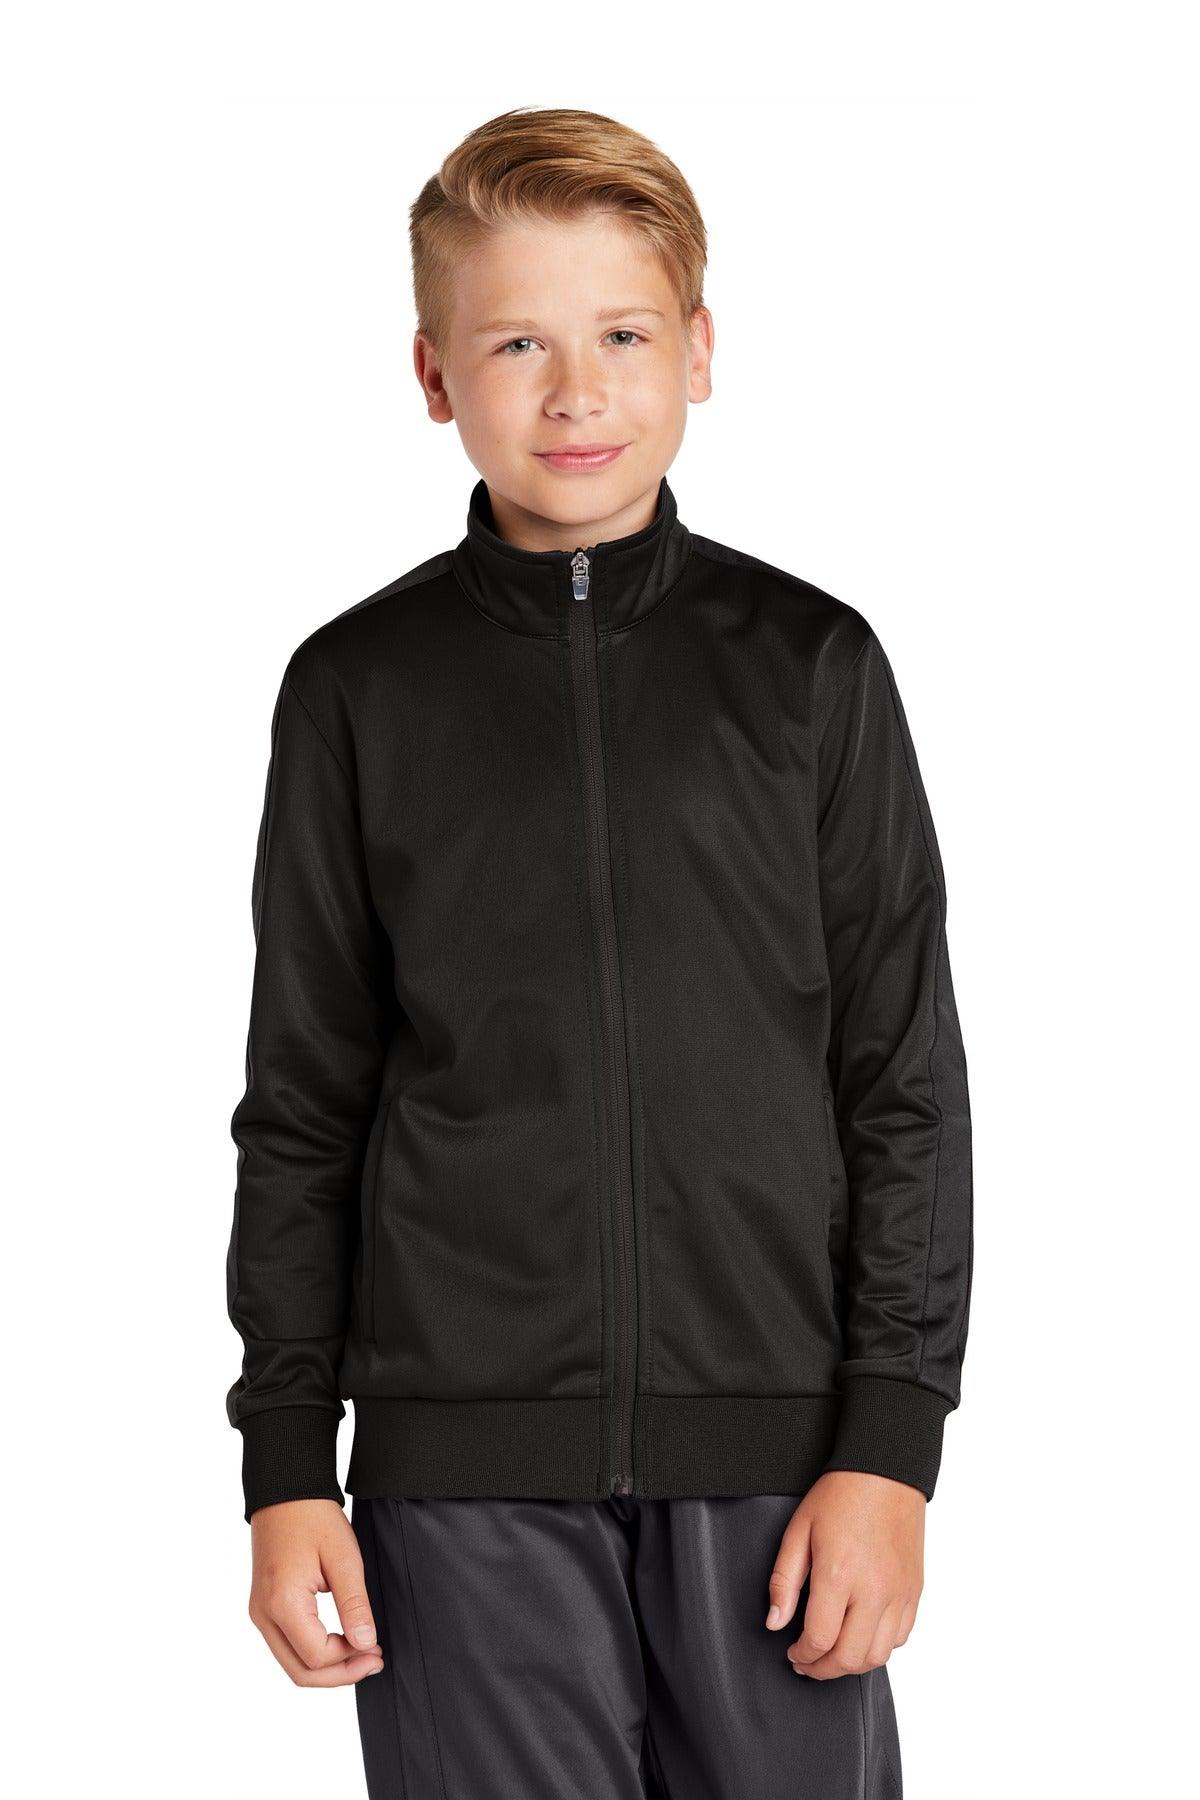 Sport-Tek Youth Tricot Track Jacket. YST94 - Dresses Max